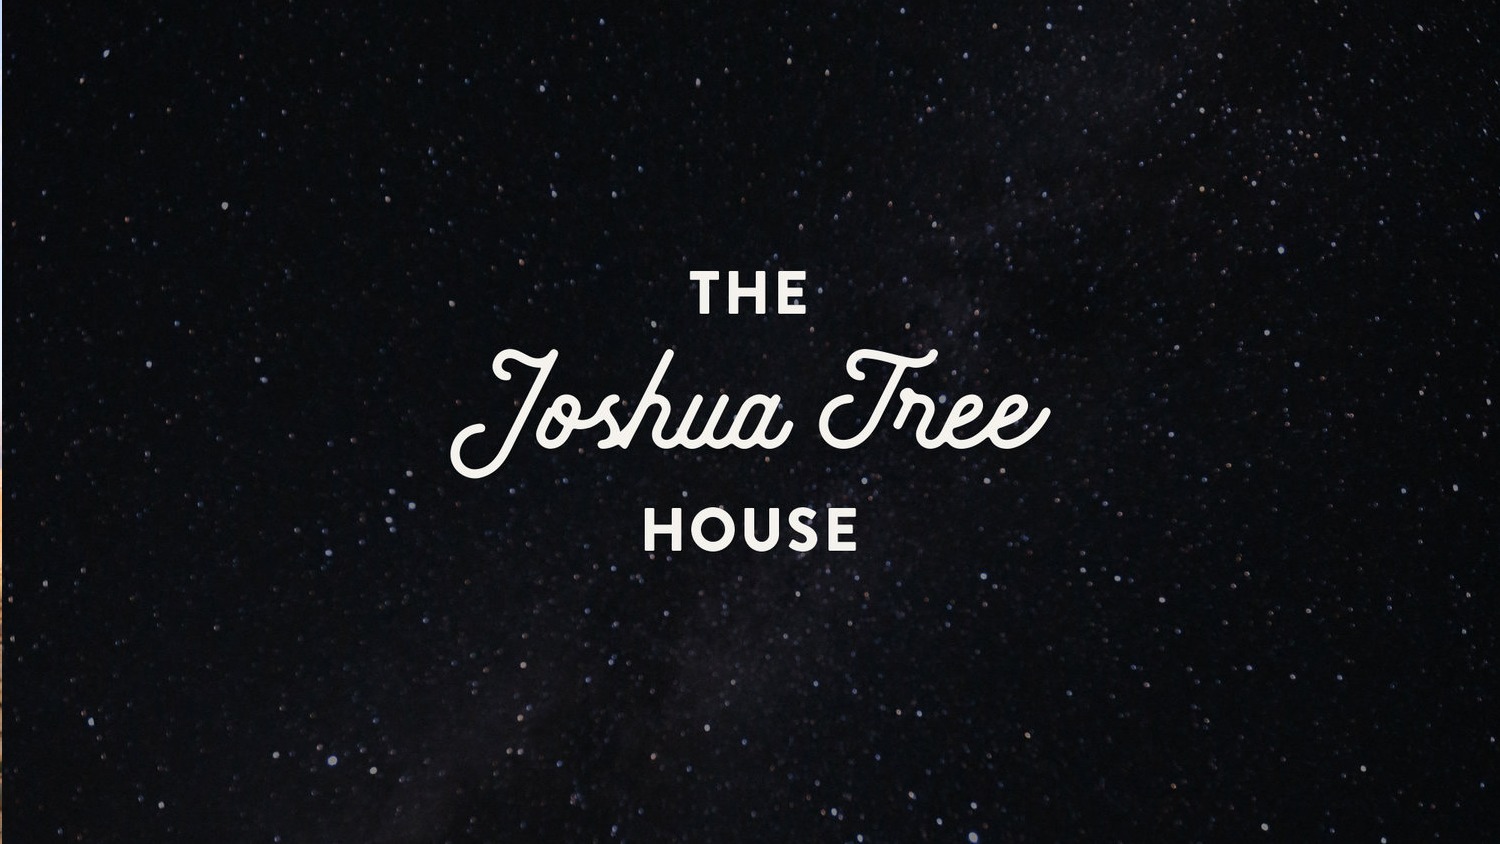 The Joshua Tree House Playlist on Spotify